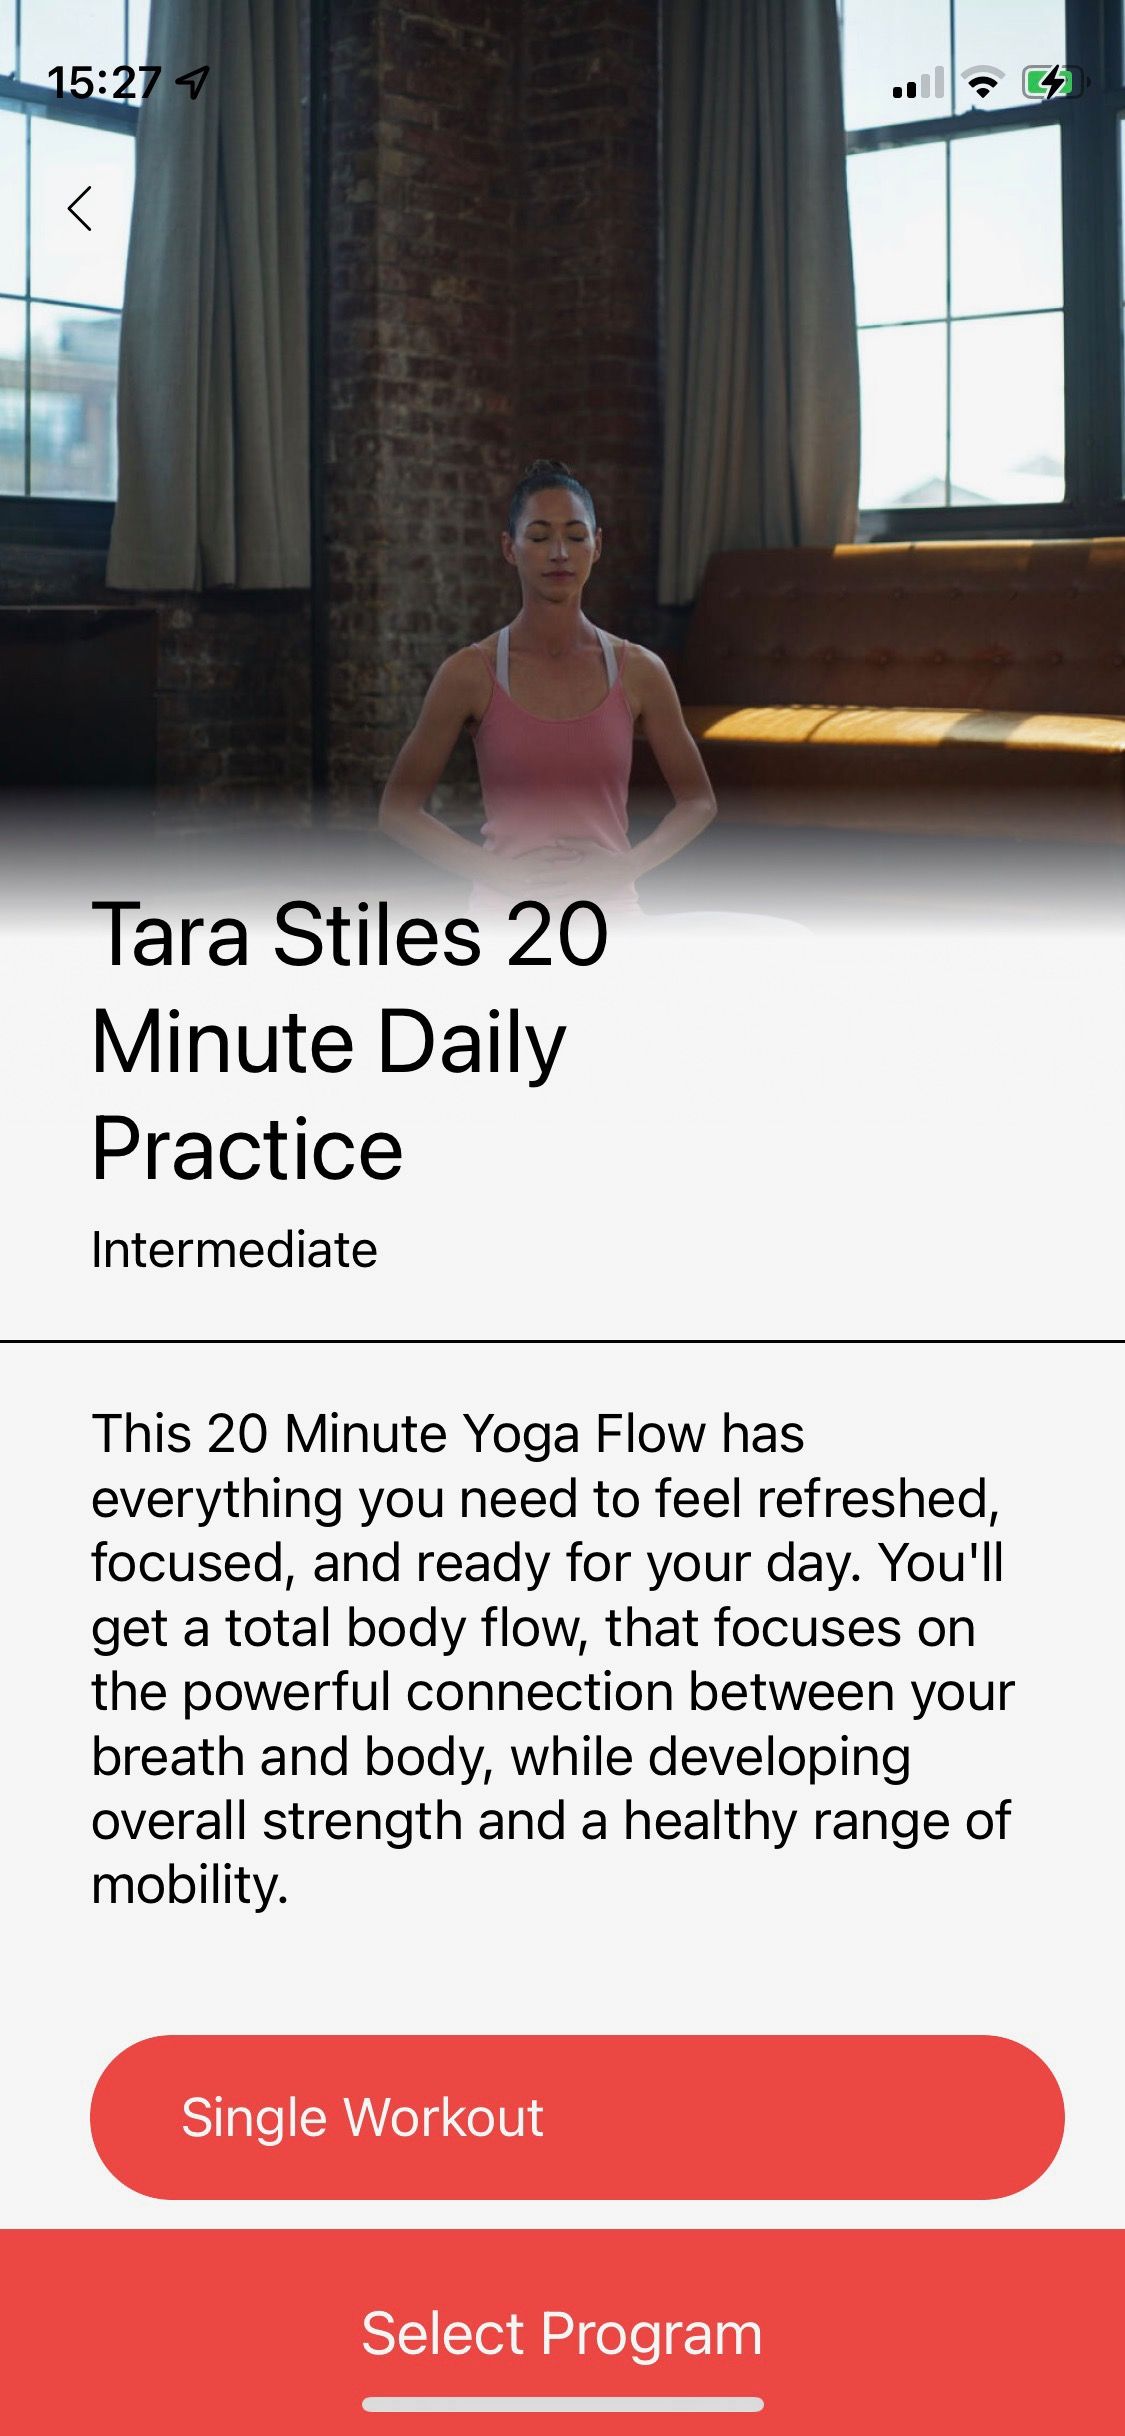 Screenshot from Jillian Michaels app showing Tara Stiles yoga flow practice